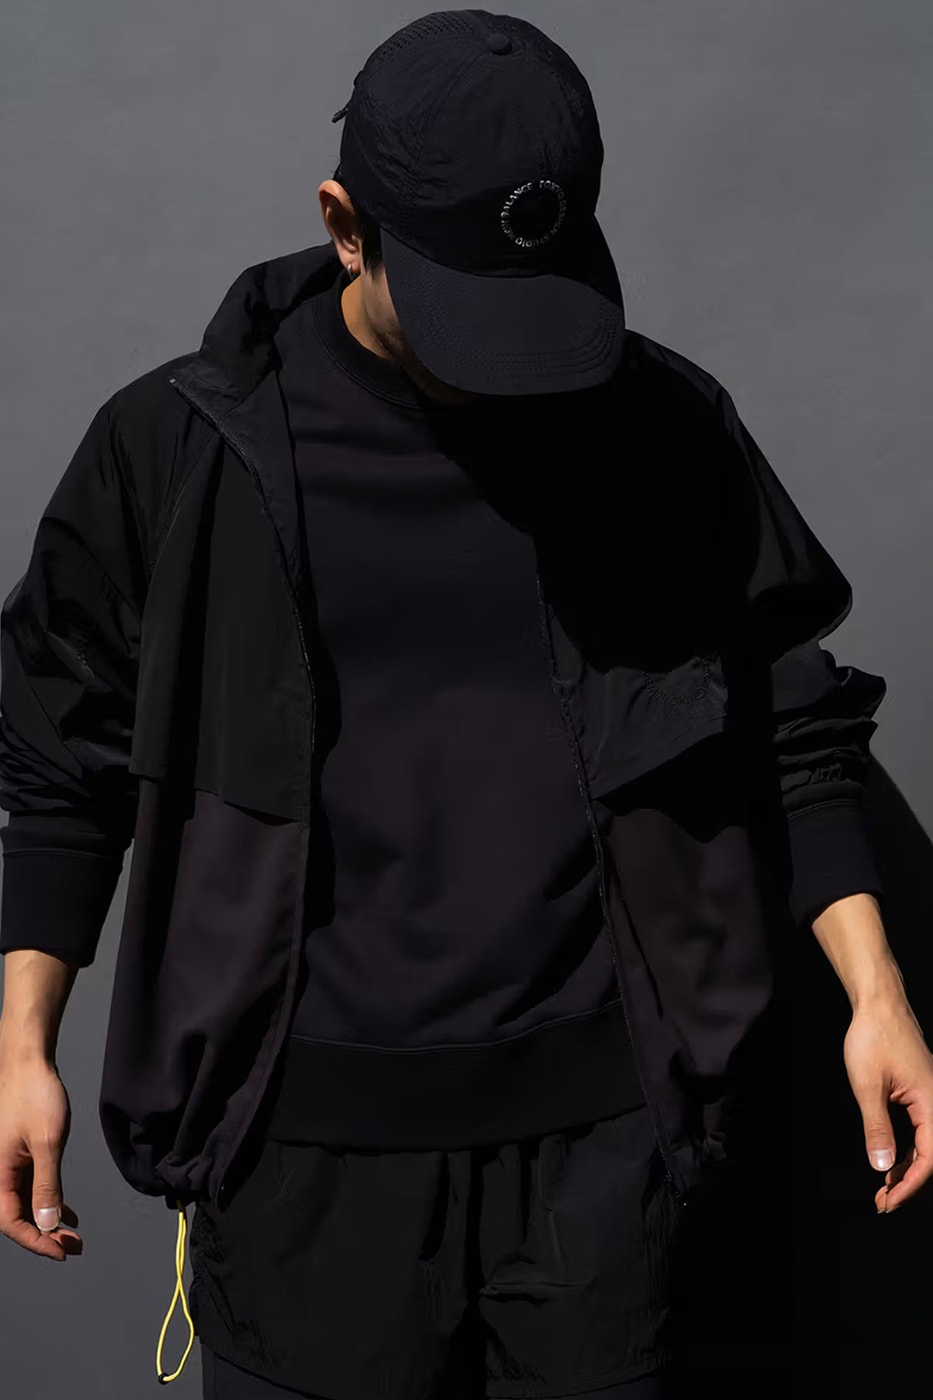 New Balance Tokyo Design Studio SS23 Proves Simplicity Is Best lookbook spring summer 2023 essentials hoodies sweaters sweatpants t-shirts